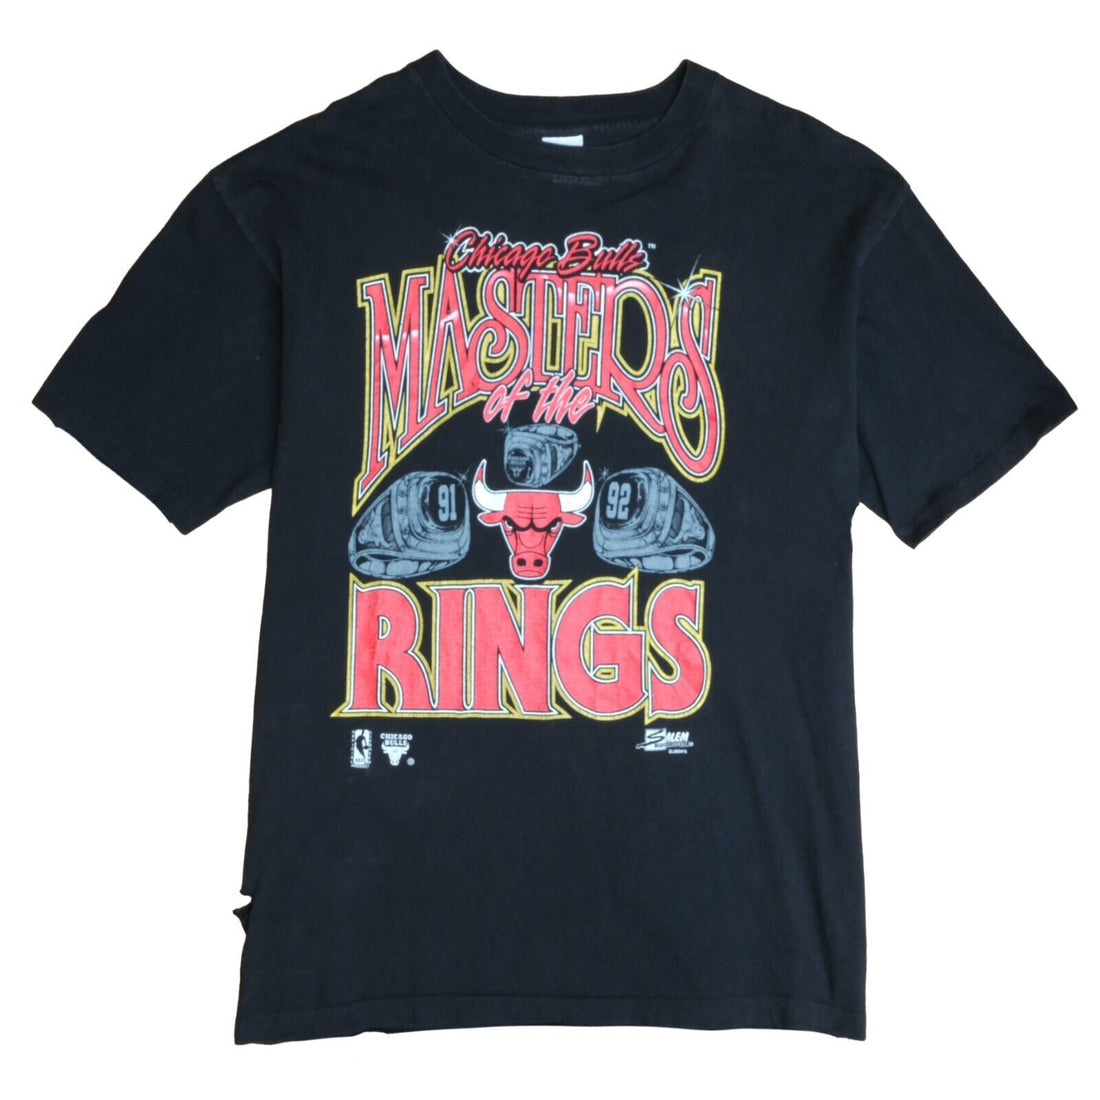 Vintage Chicago Bulls Master Of The Rings Salem T-Shirt Size XL Black 90s NBA